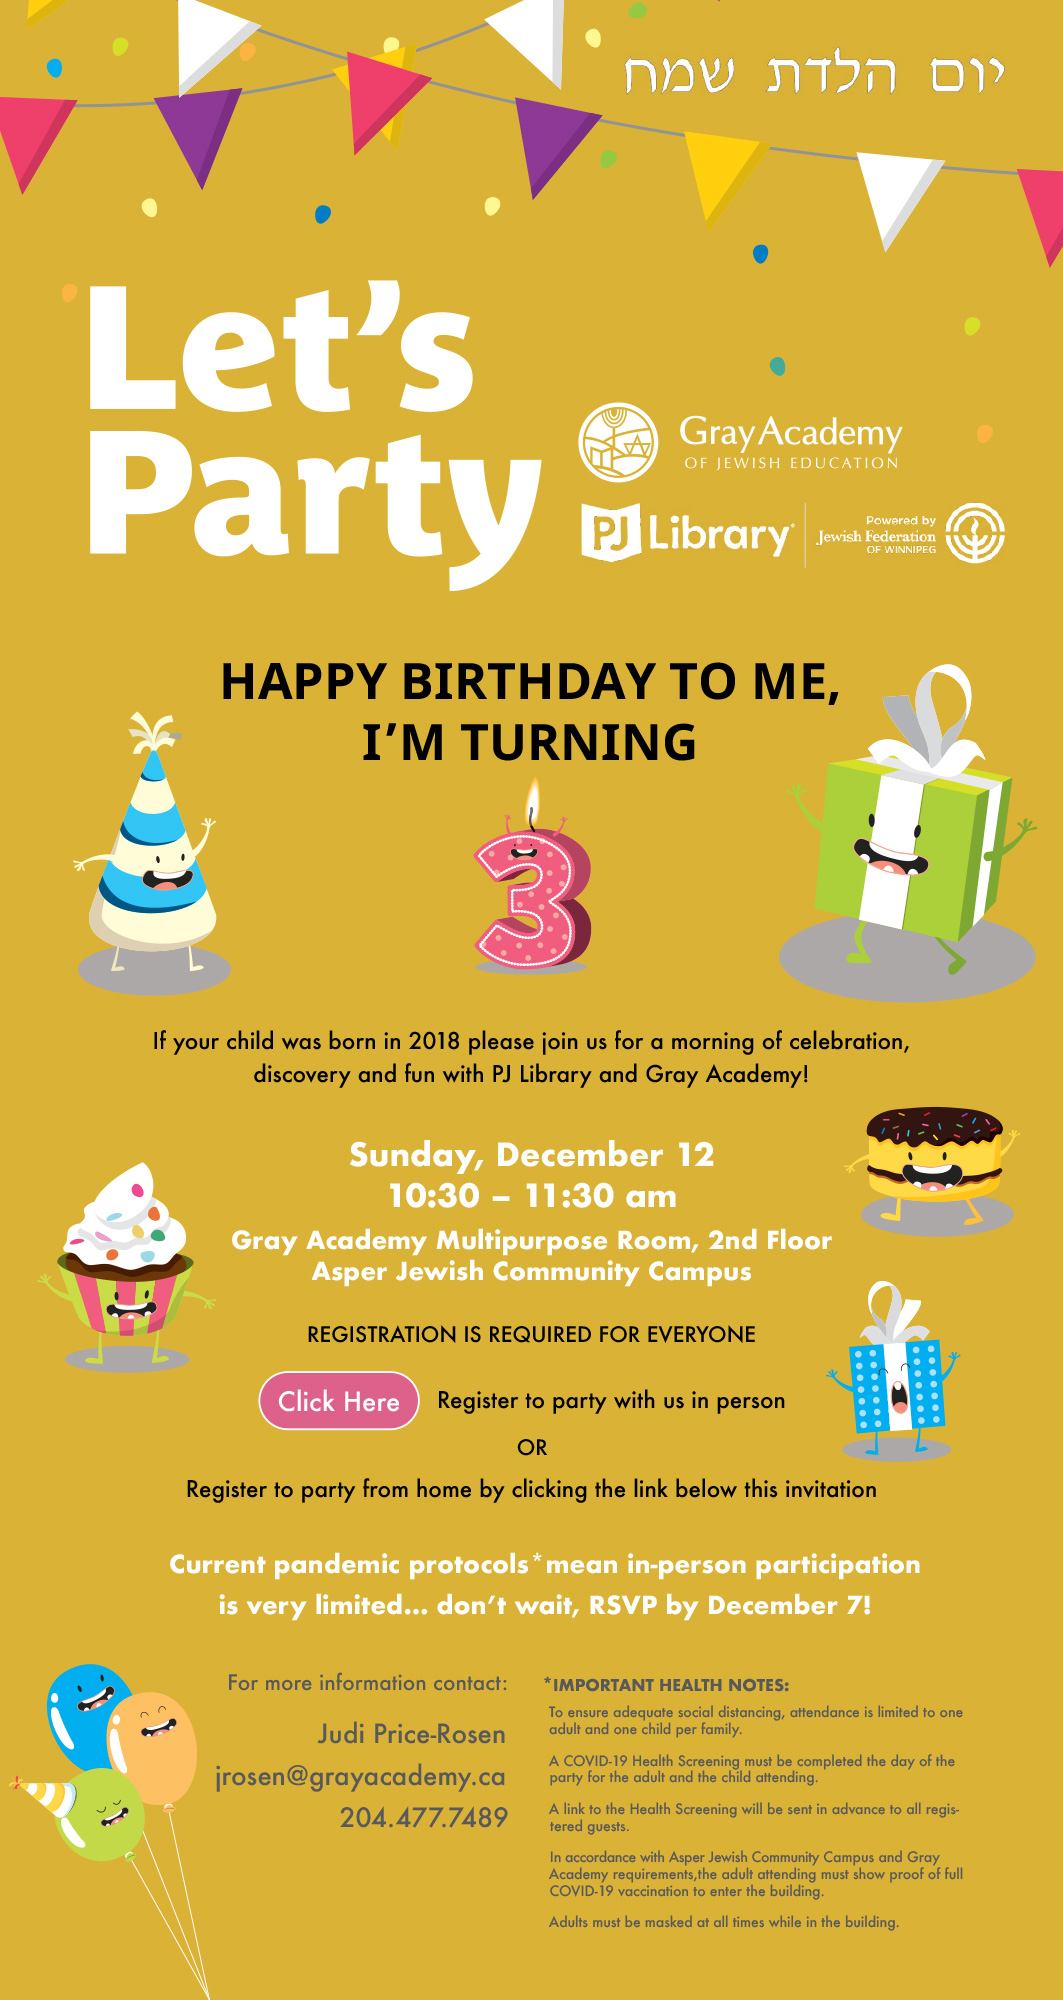 3 year old birthday e-invitation - "Happy birthday to me, I'm turning 3"